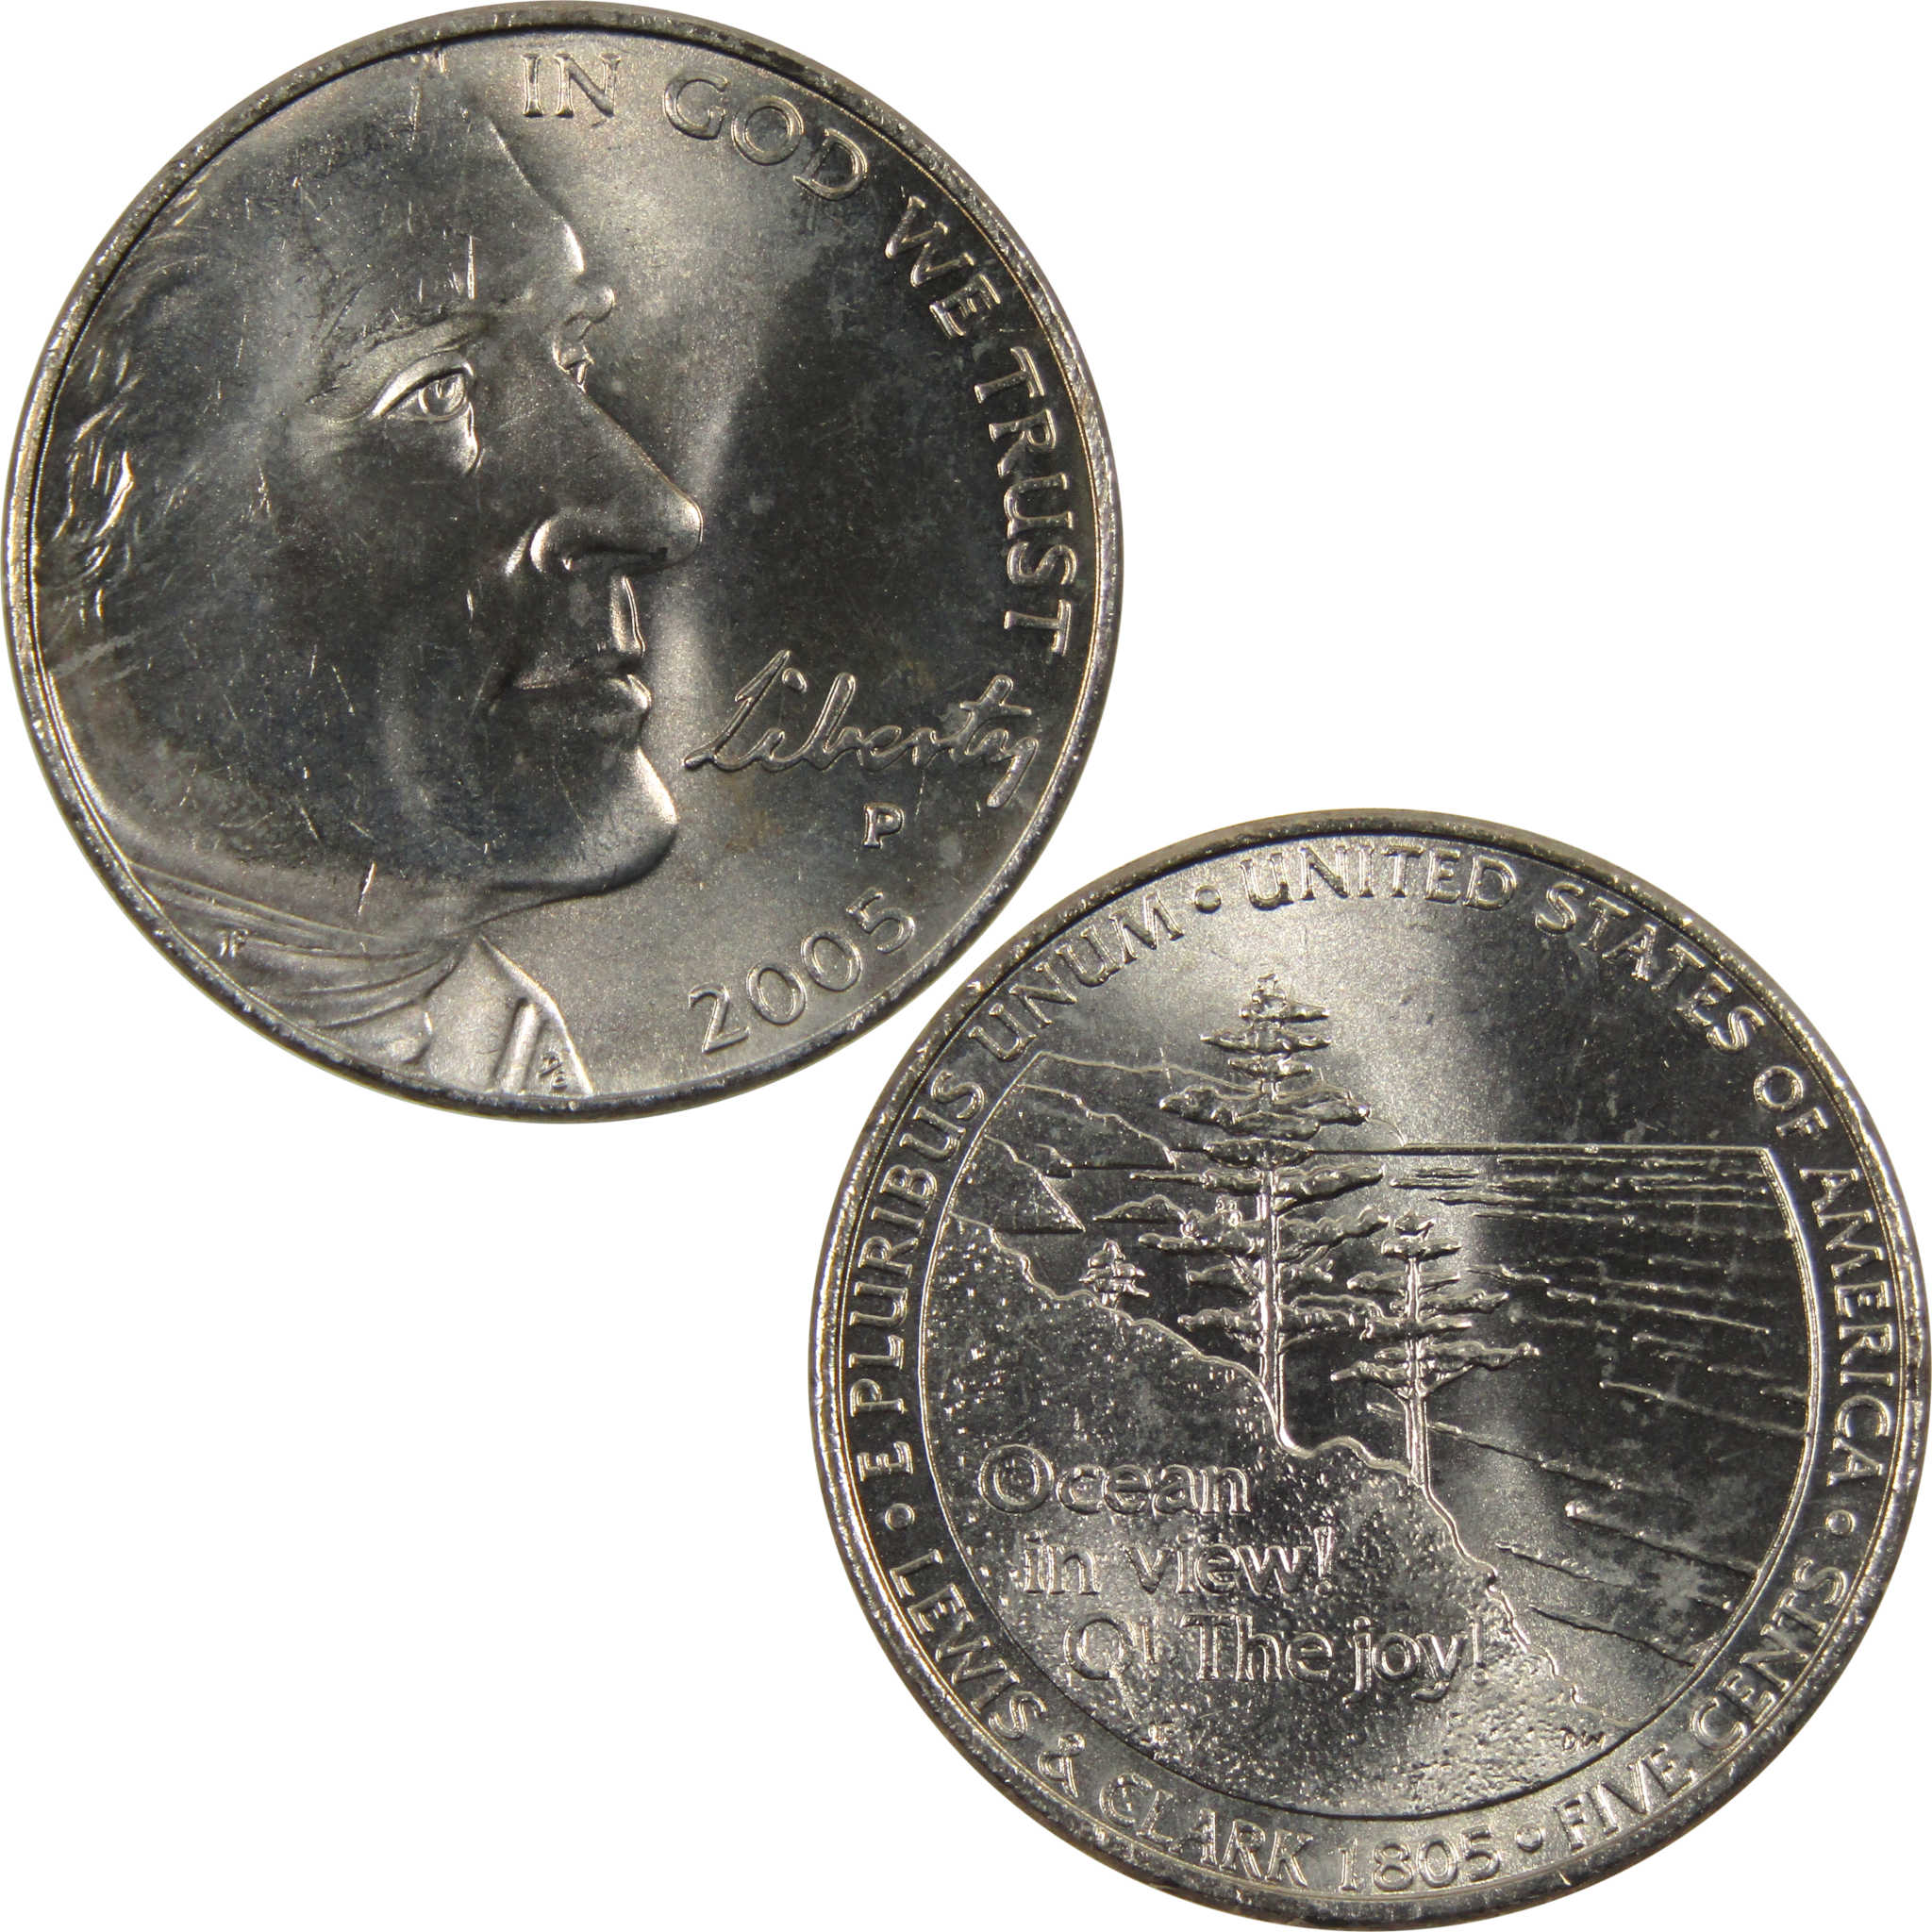 2005 P Ocean in View Jefferson Nickel BU Uncirculated 5c Coin